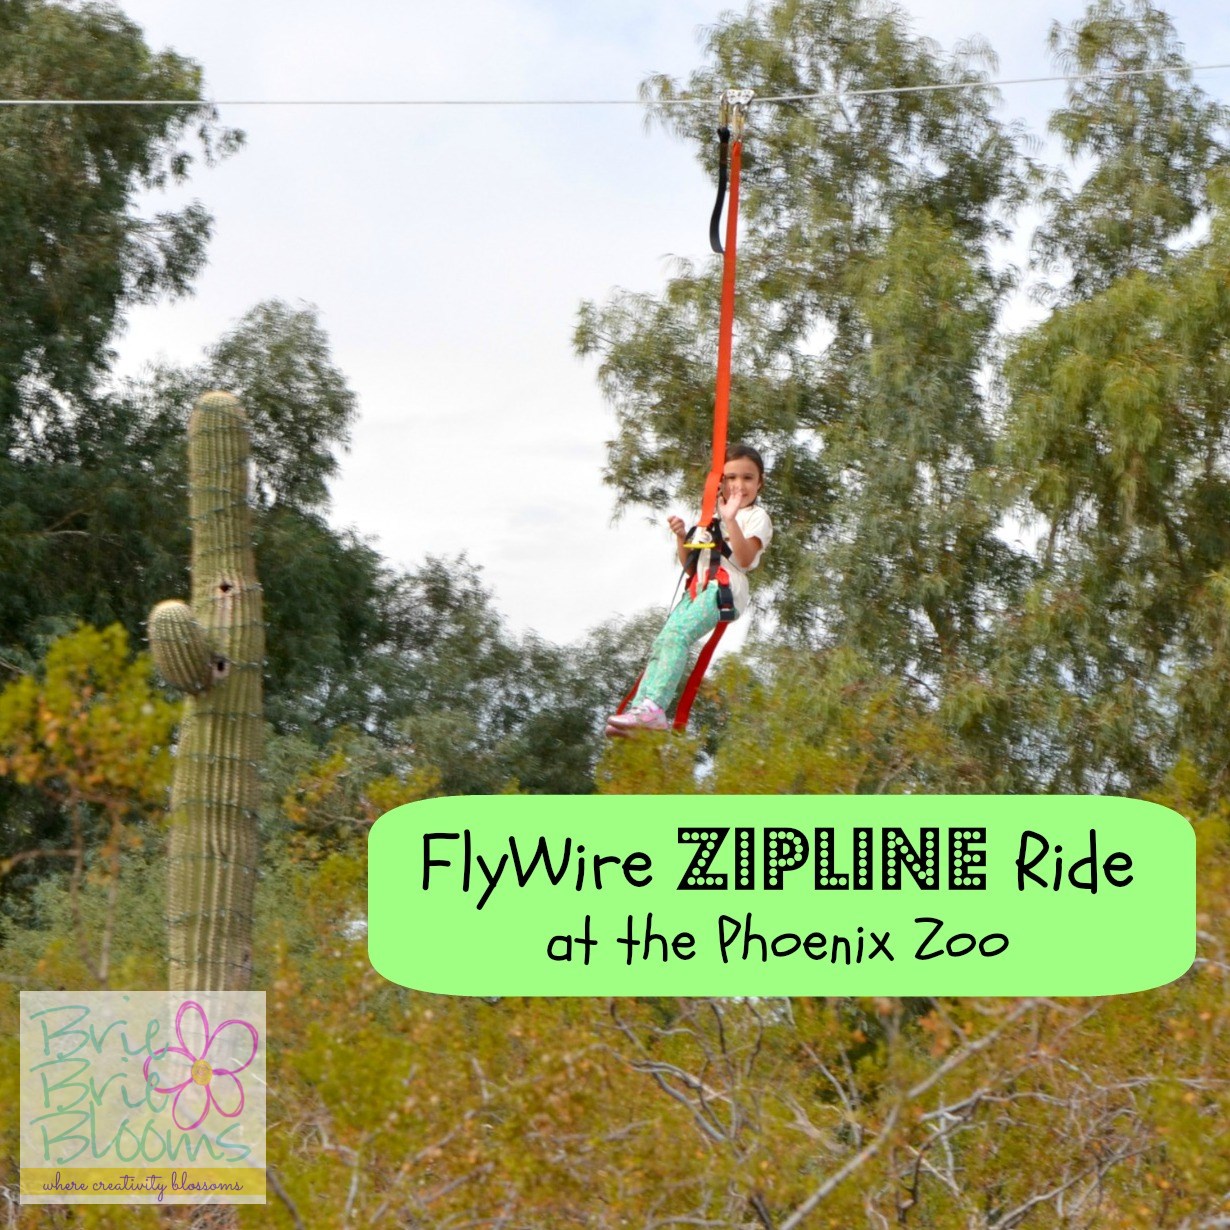 FlyWire Zipline Ride at the Phoenix Zoo